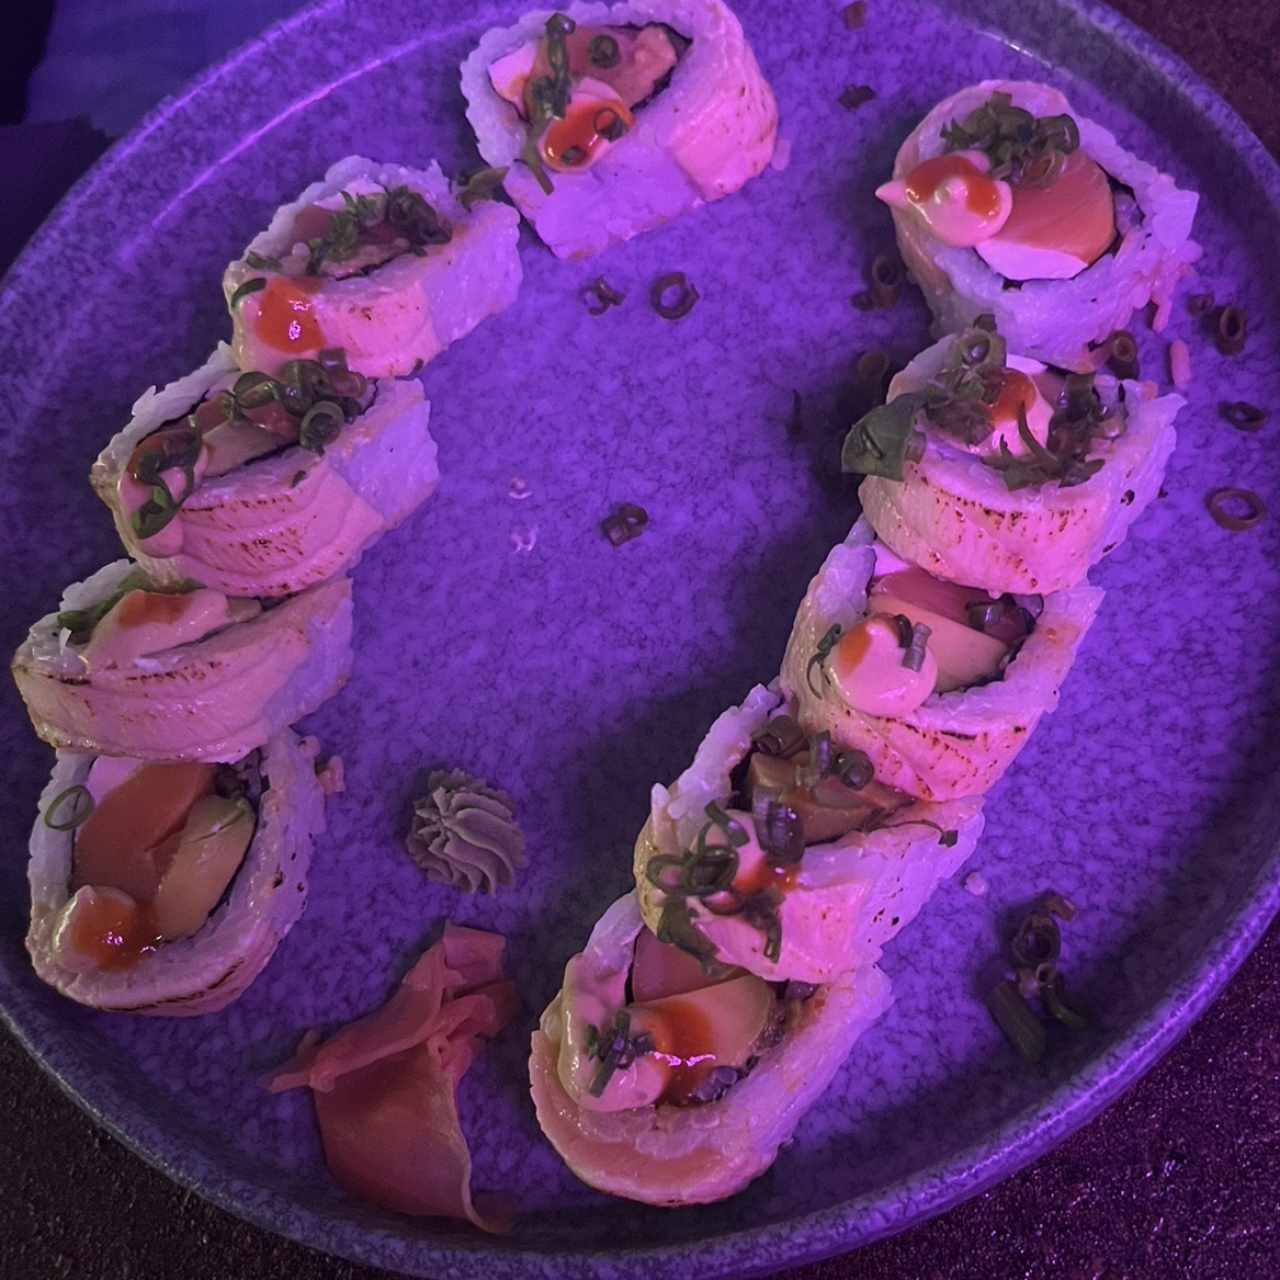 Sushi Rolls - Crazy Salmon Roll